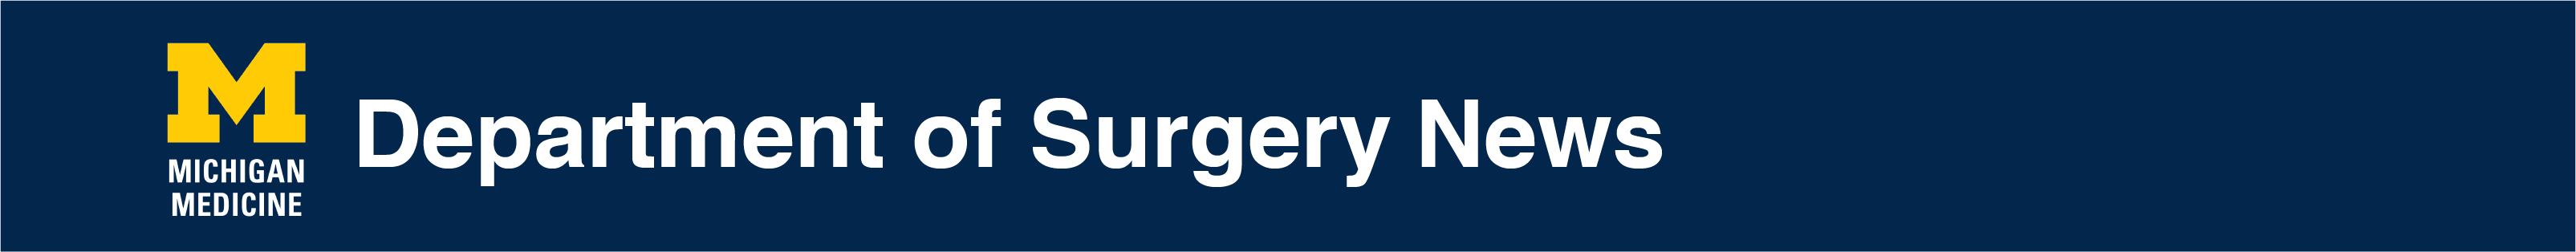 Department of Surgery News